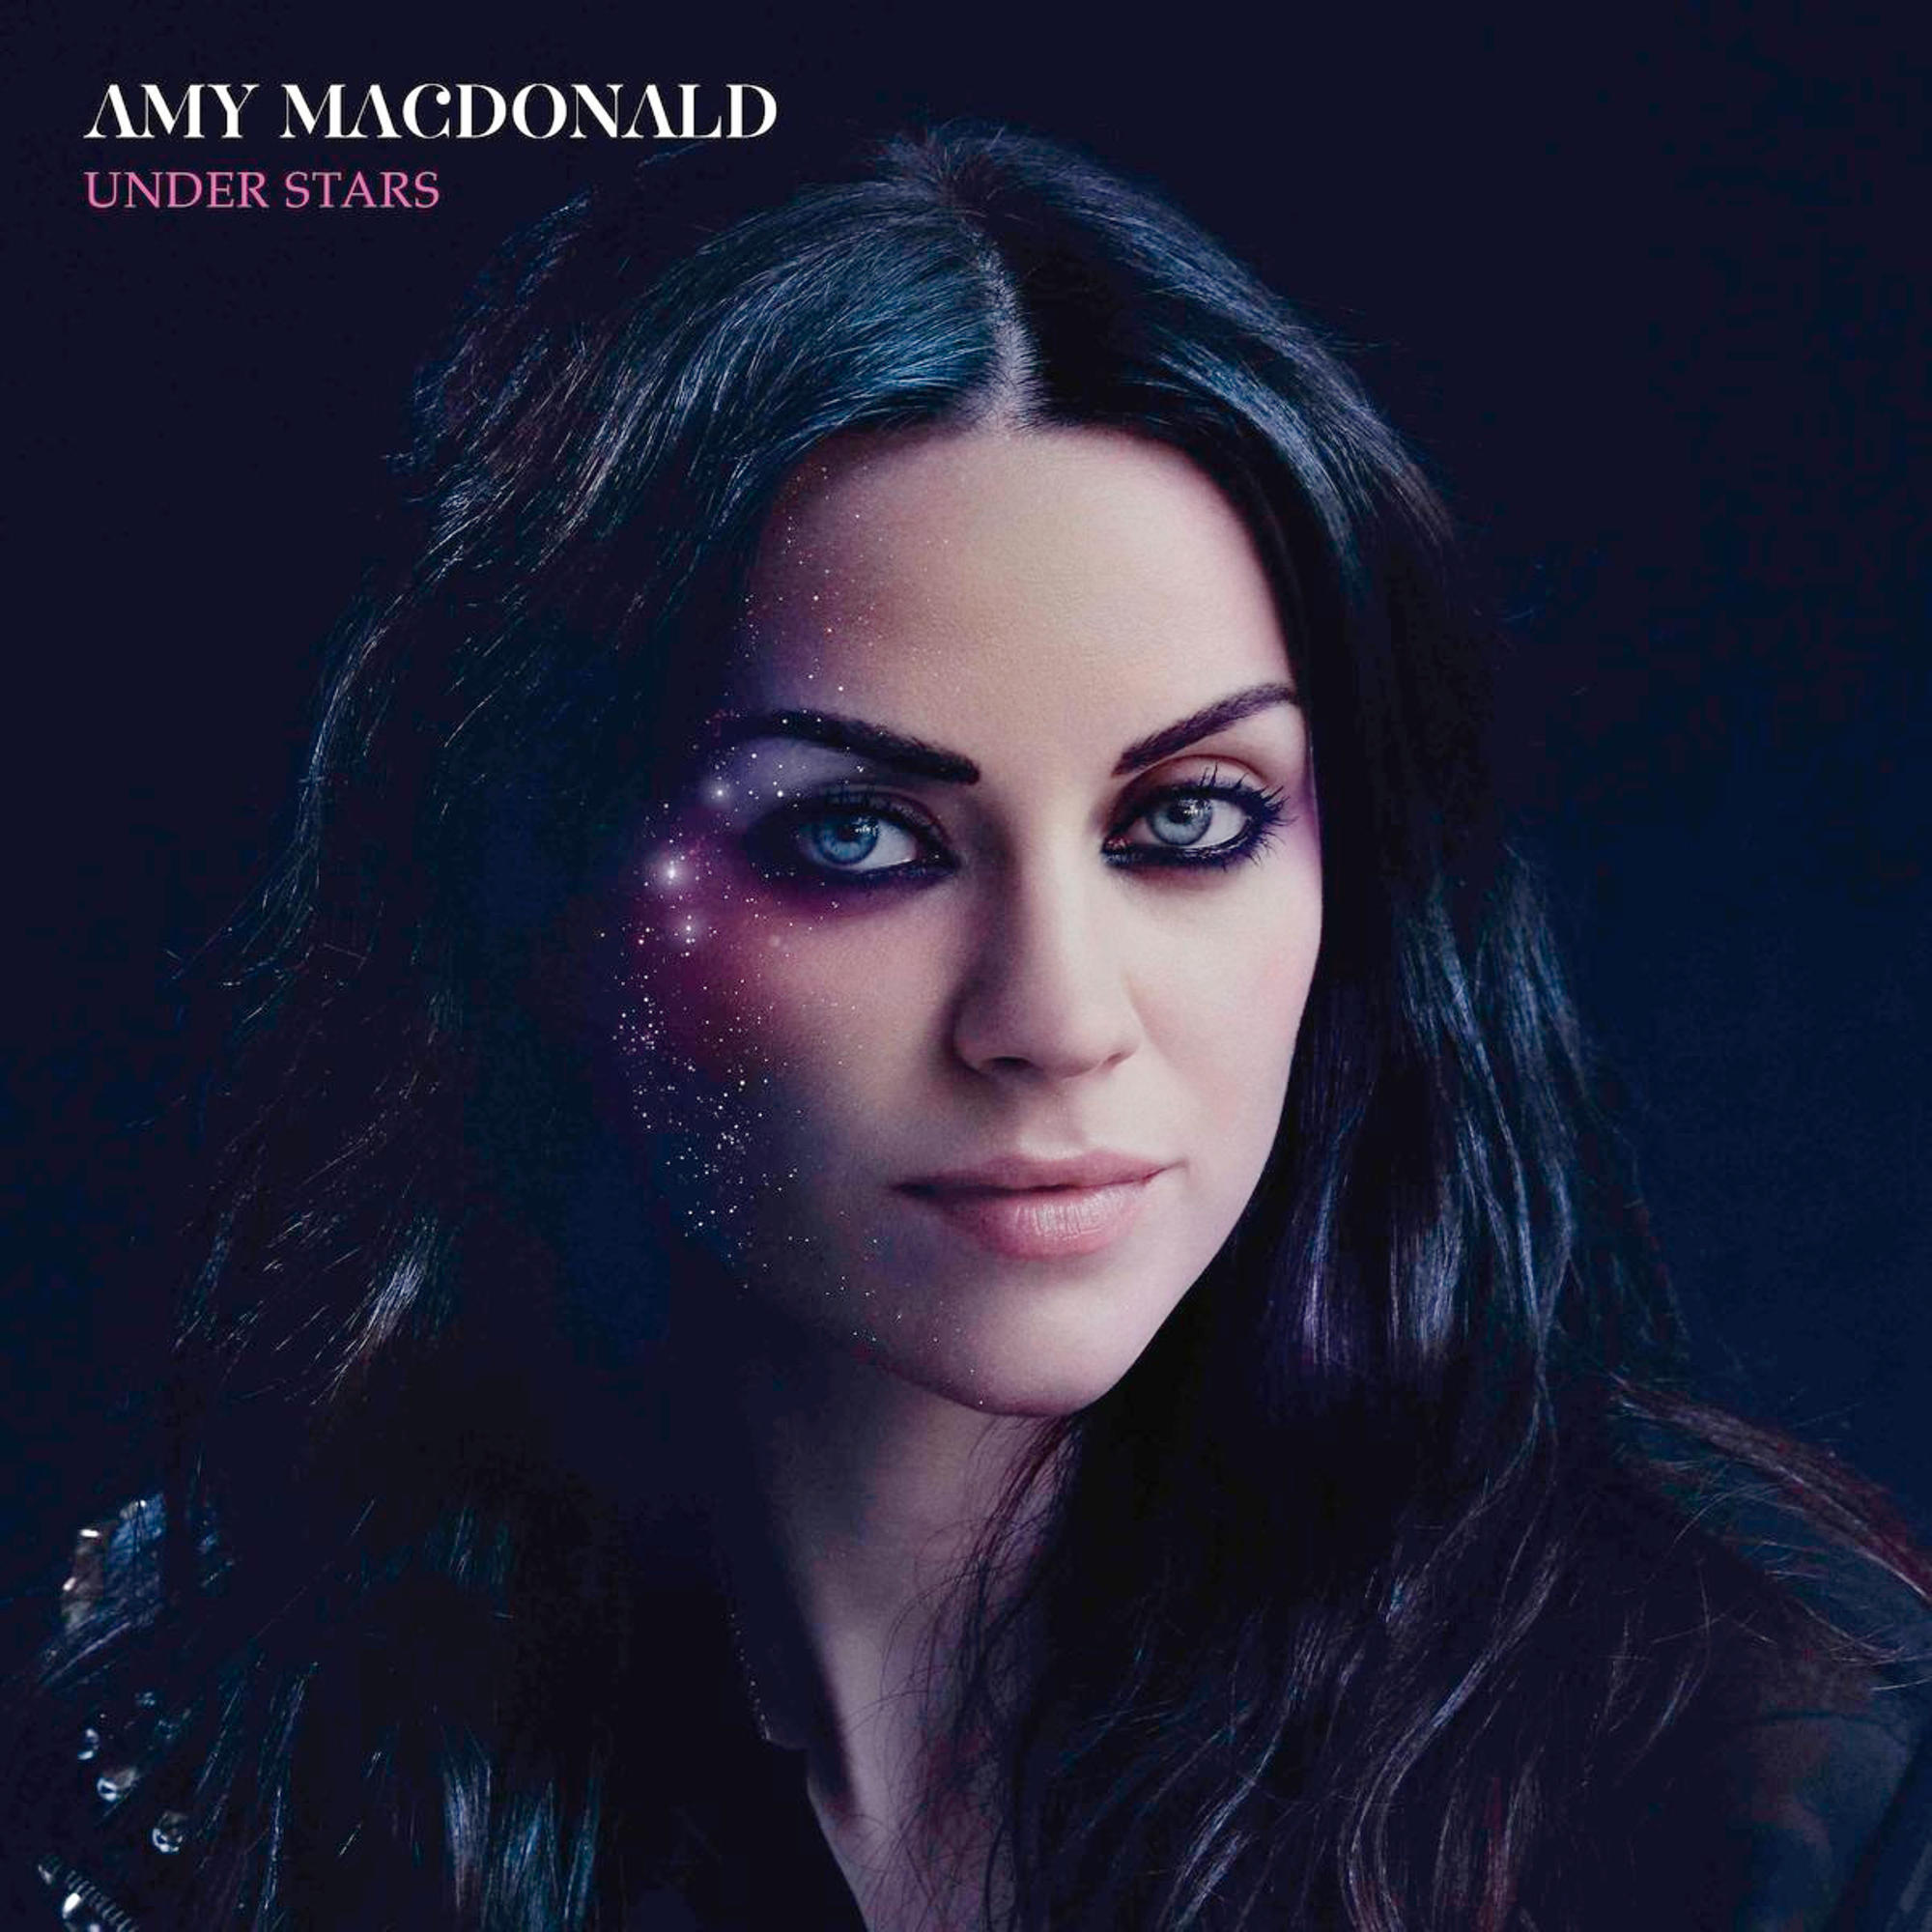 8 Under mit - (Deluxe (CD) Edition MacDonald Amy Bonus-Tracks) Stars -